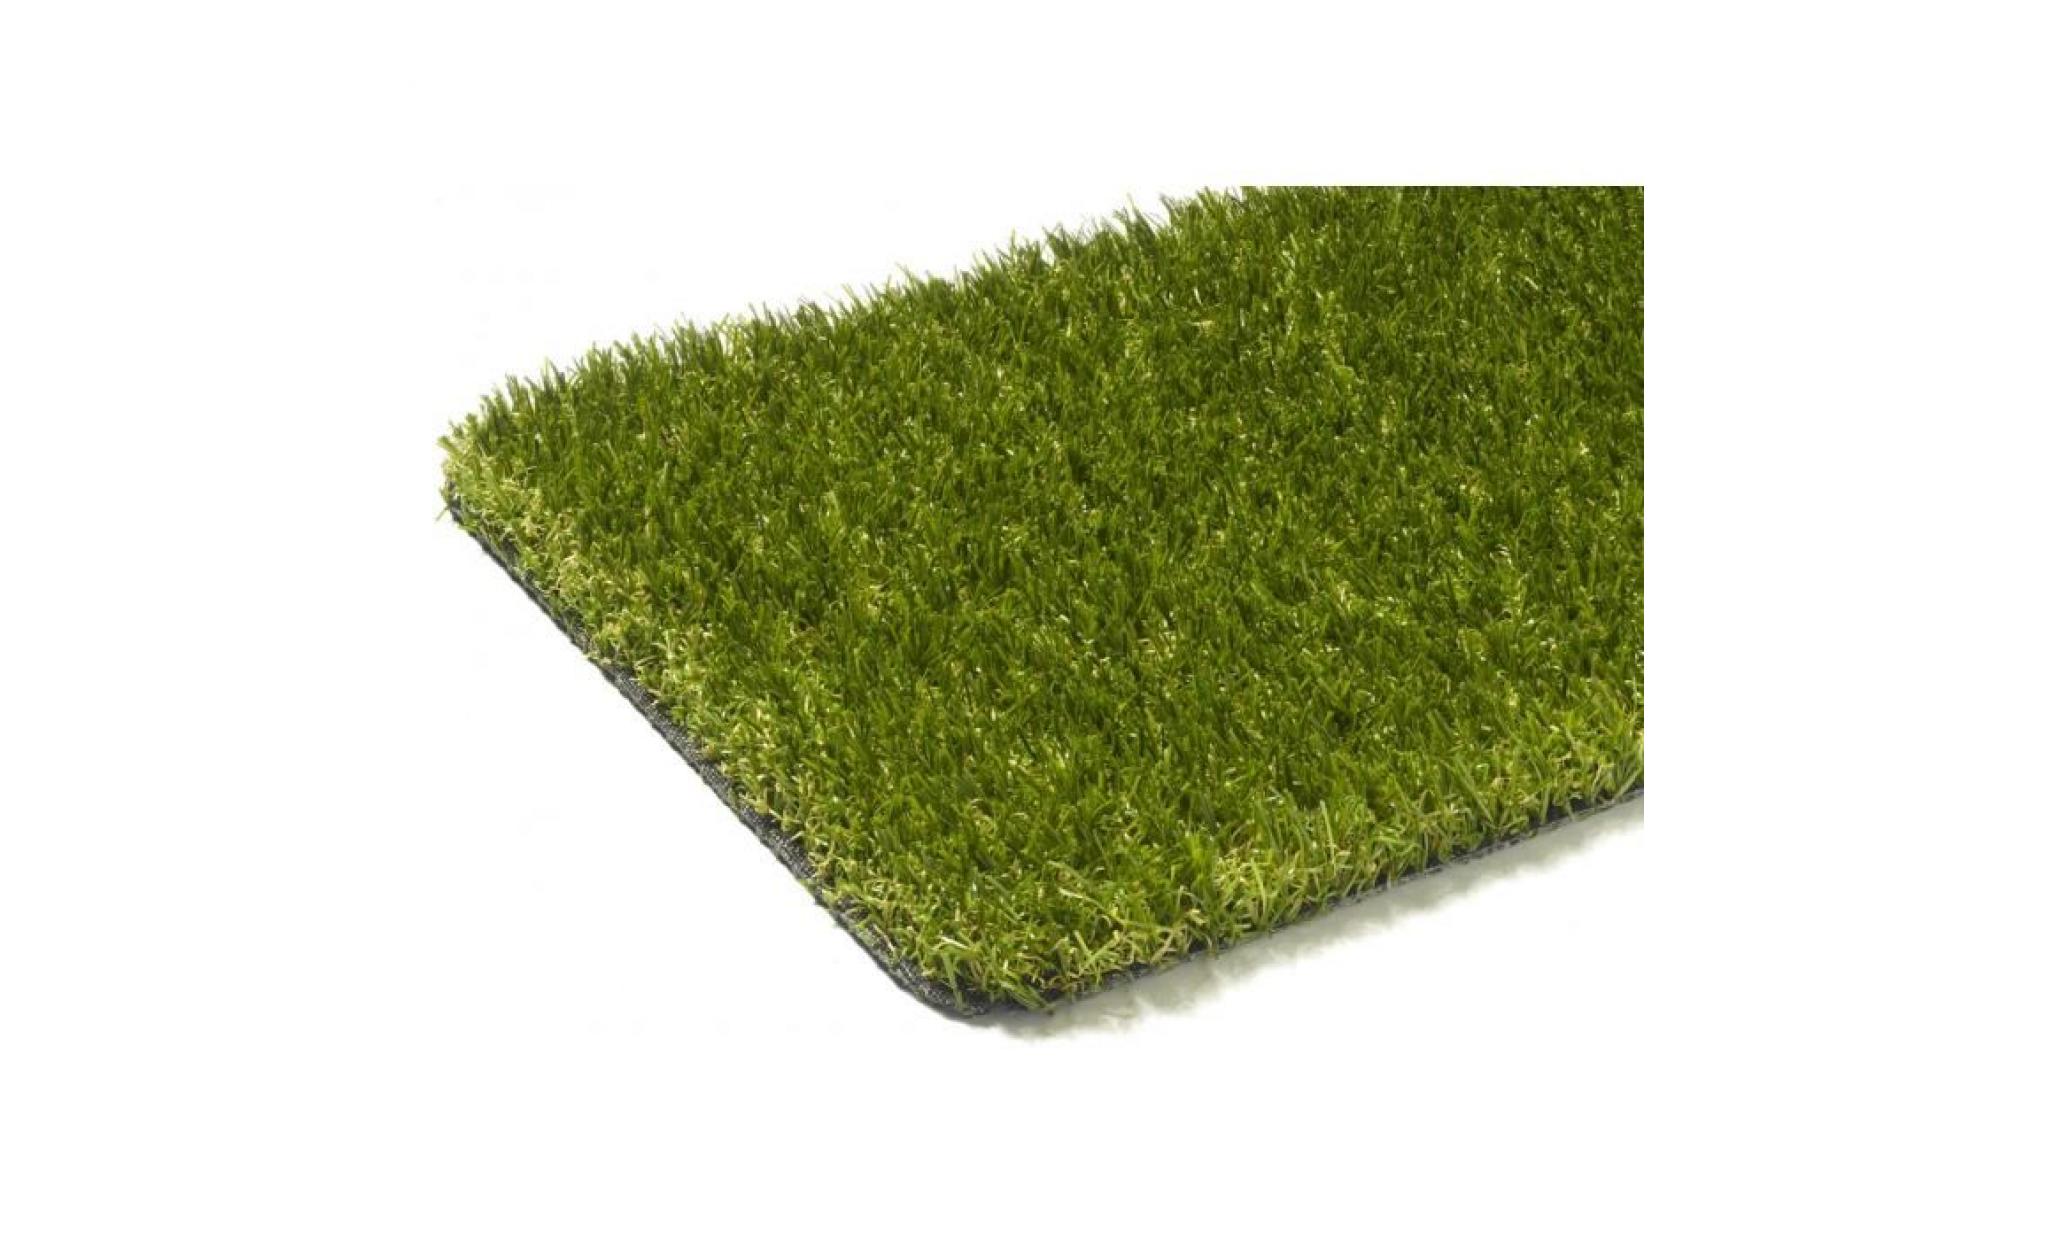 chelsea   tapis type luxe gazon artificiel – pour jardin, terrasse, balcon   vert  [200x400 cm]